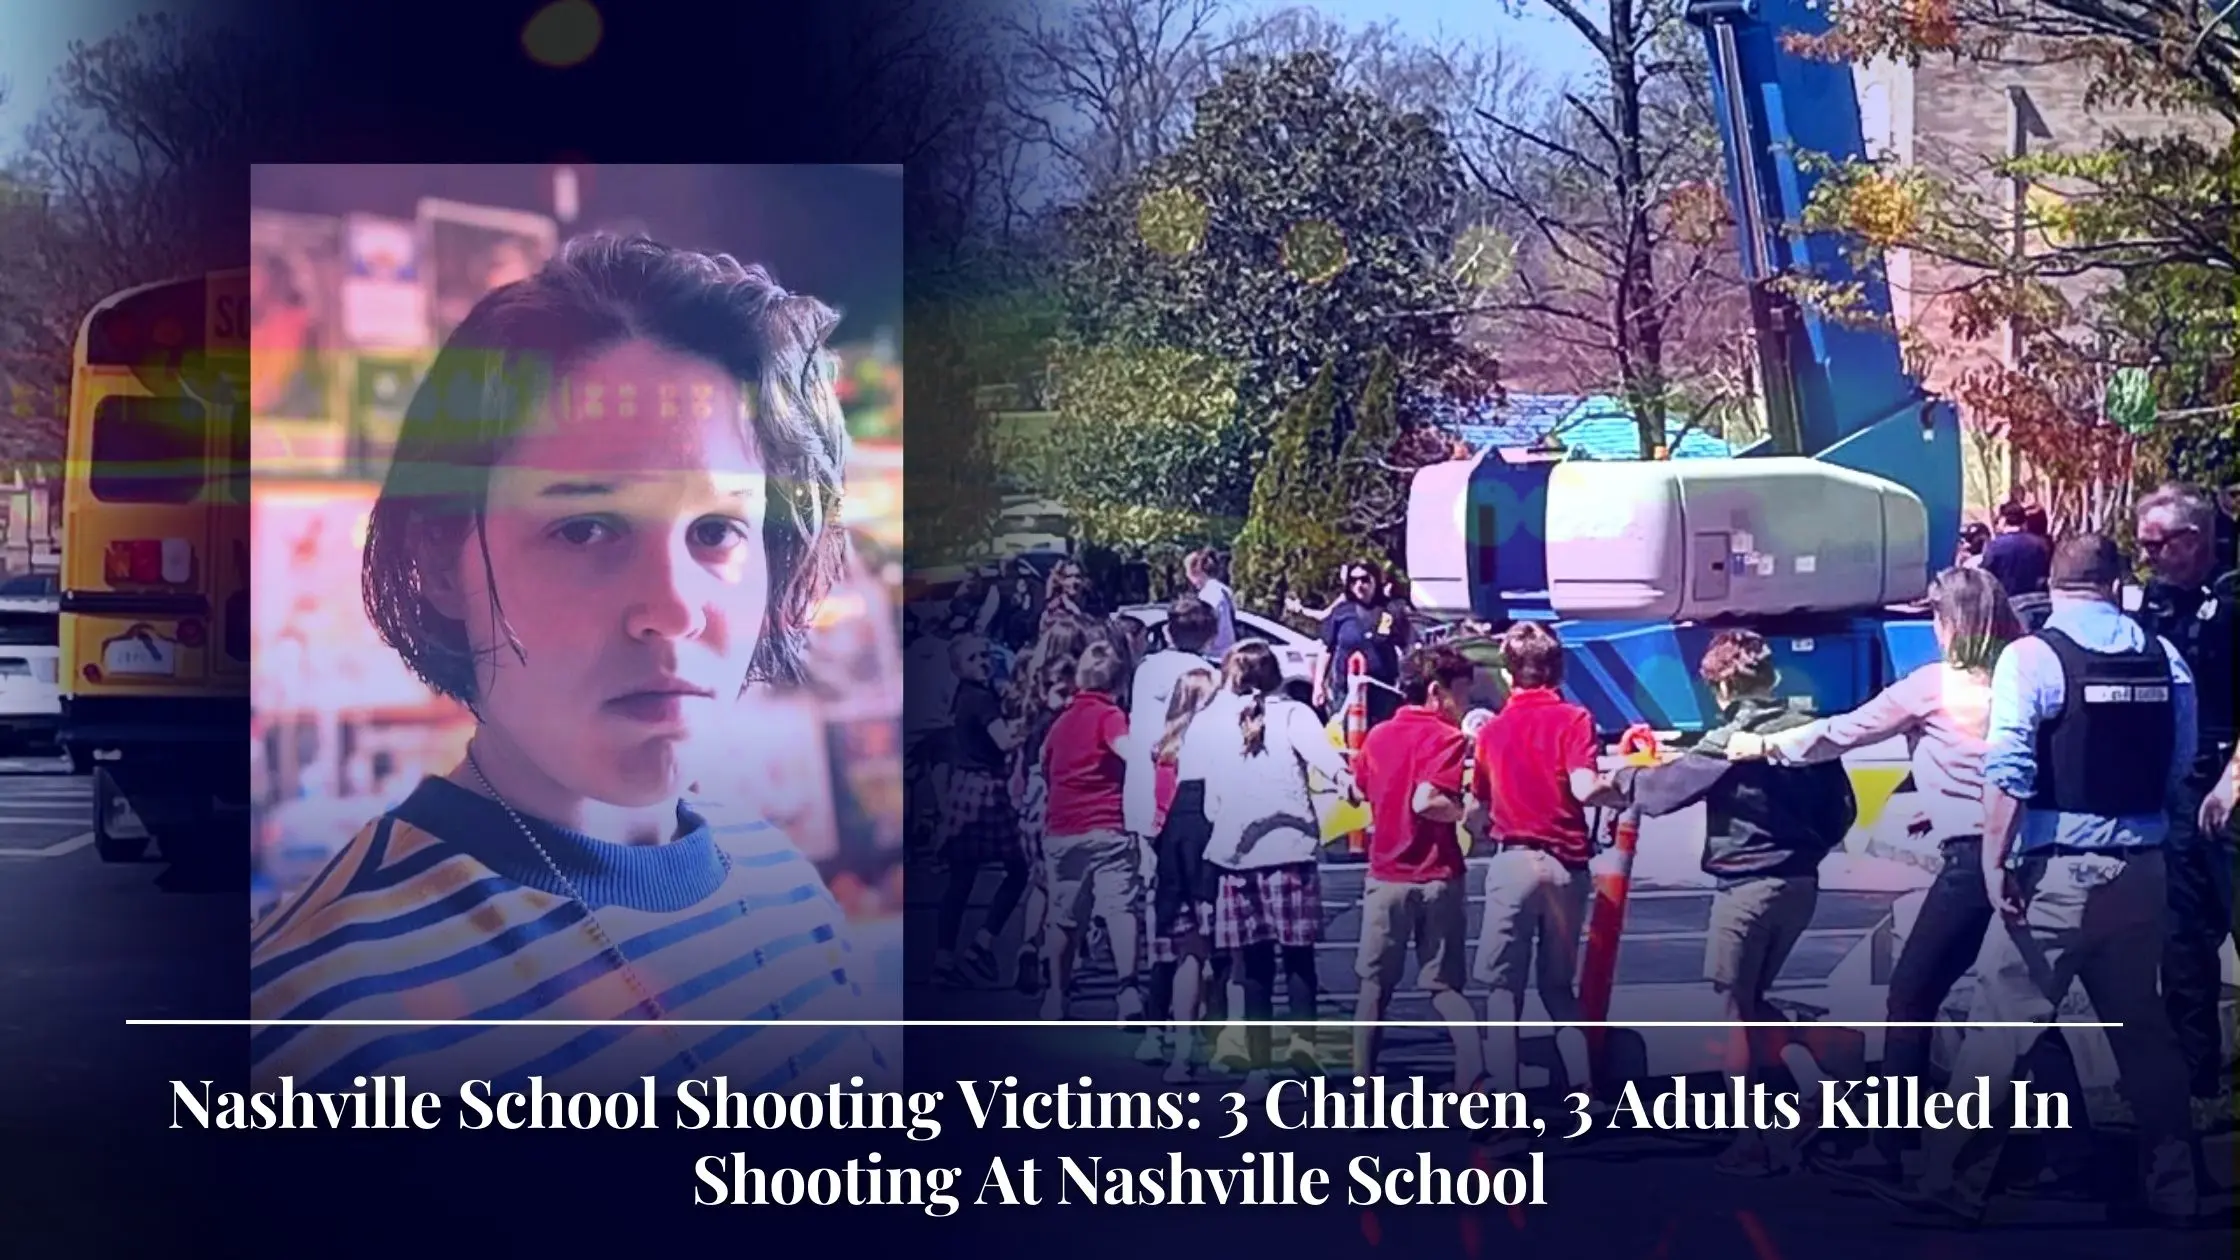 Nashville School Shooting Victims 3 Children, 3 Adults Killed In Shooting At Nashville School